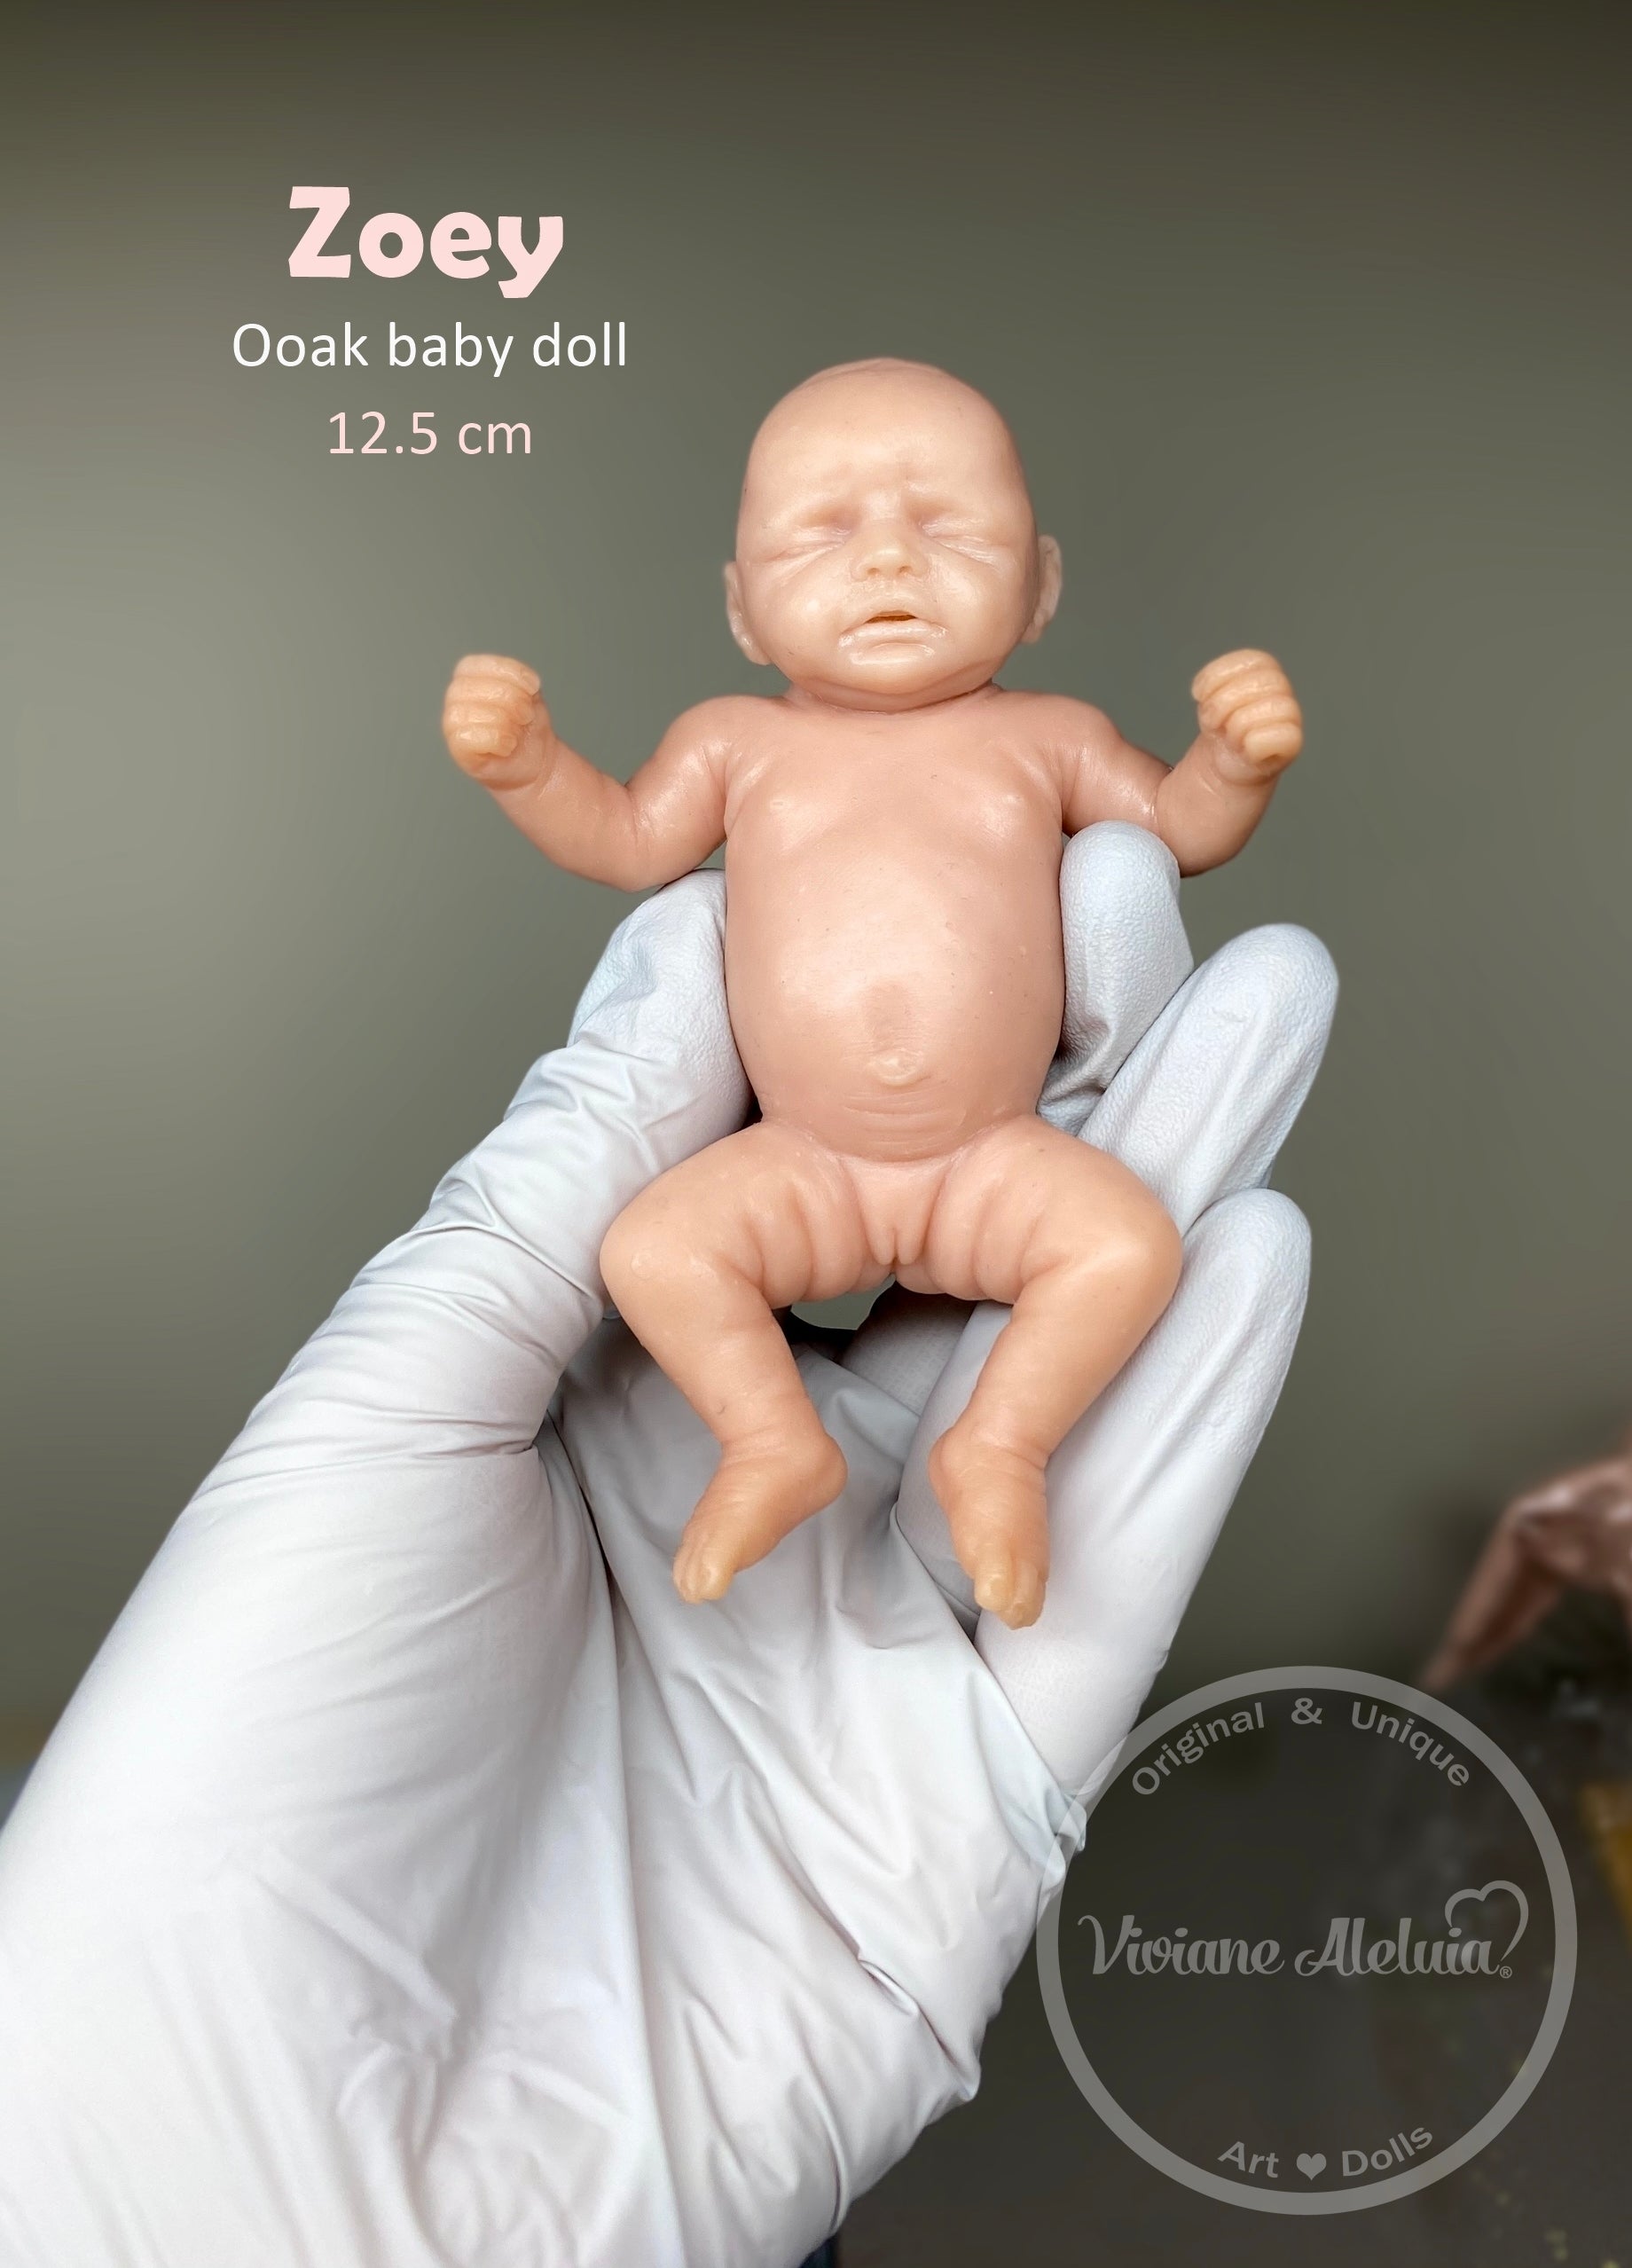 Zoey Full Body Mini Silicone Baby by Viviane Aleluia